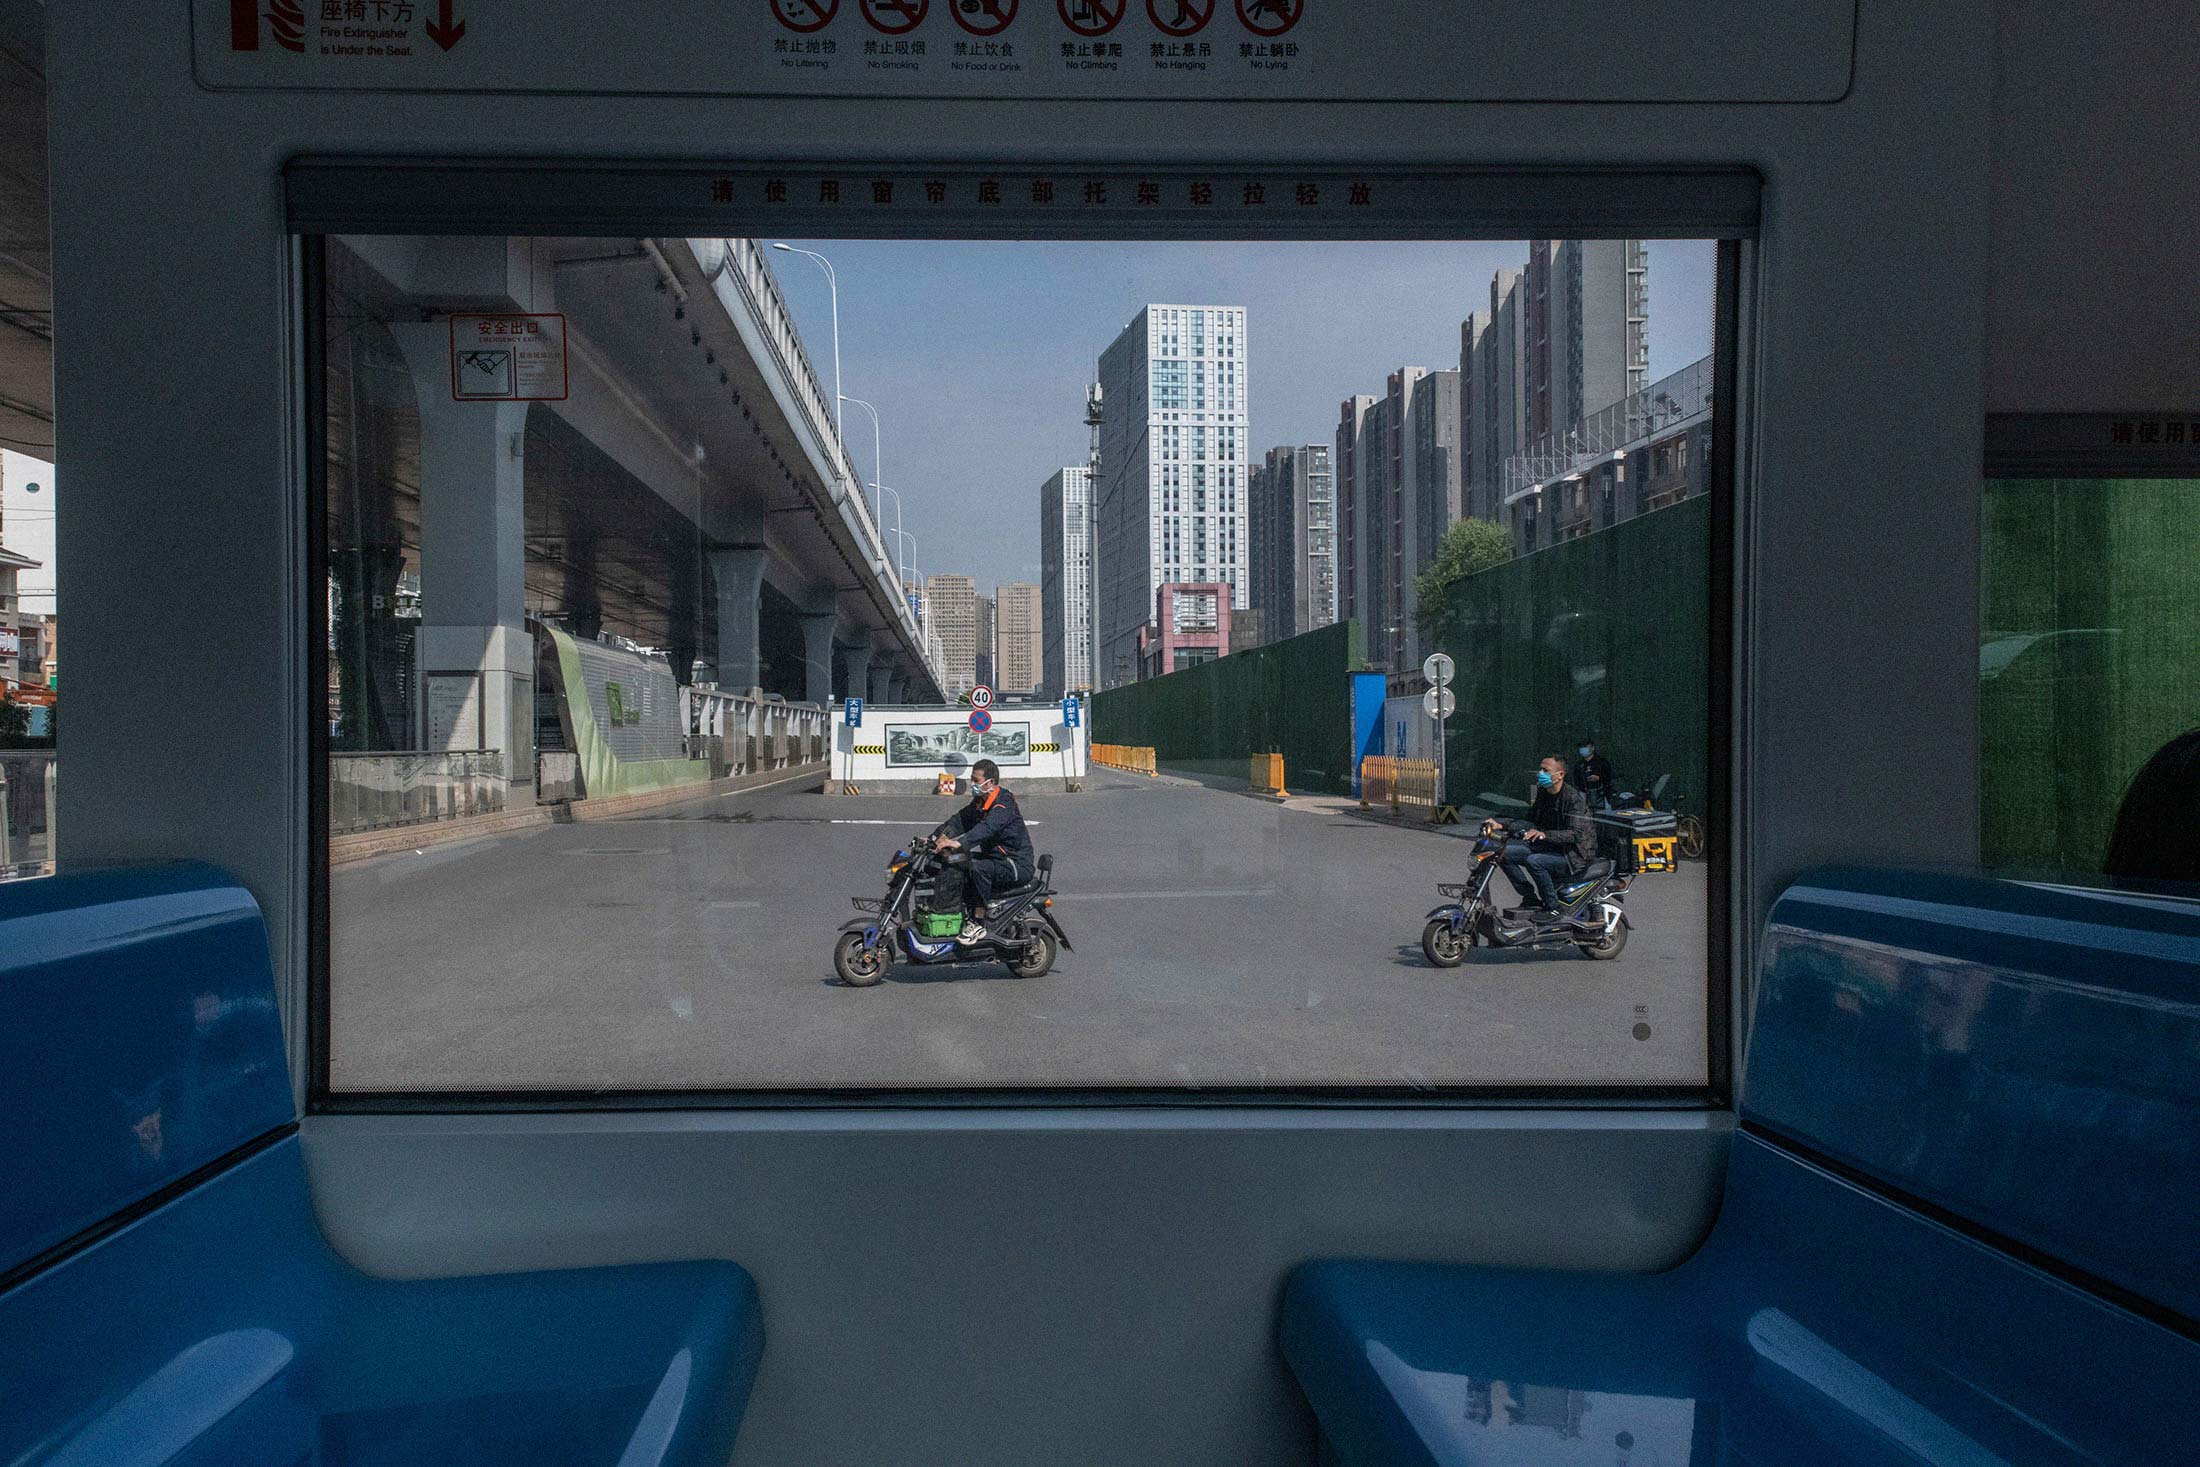 A view of Wuhan from inside an empty tram.